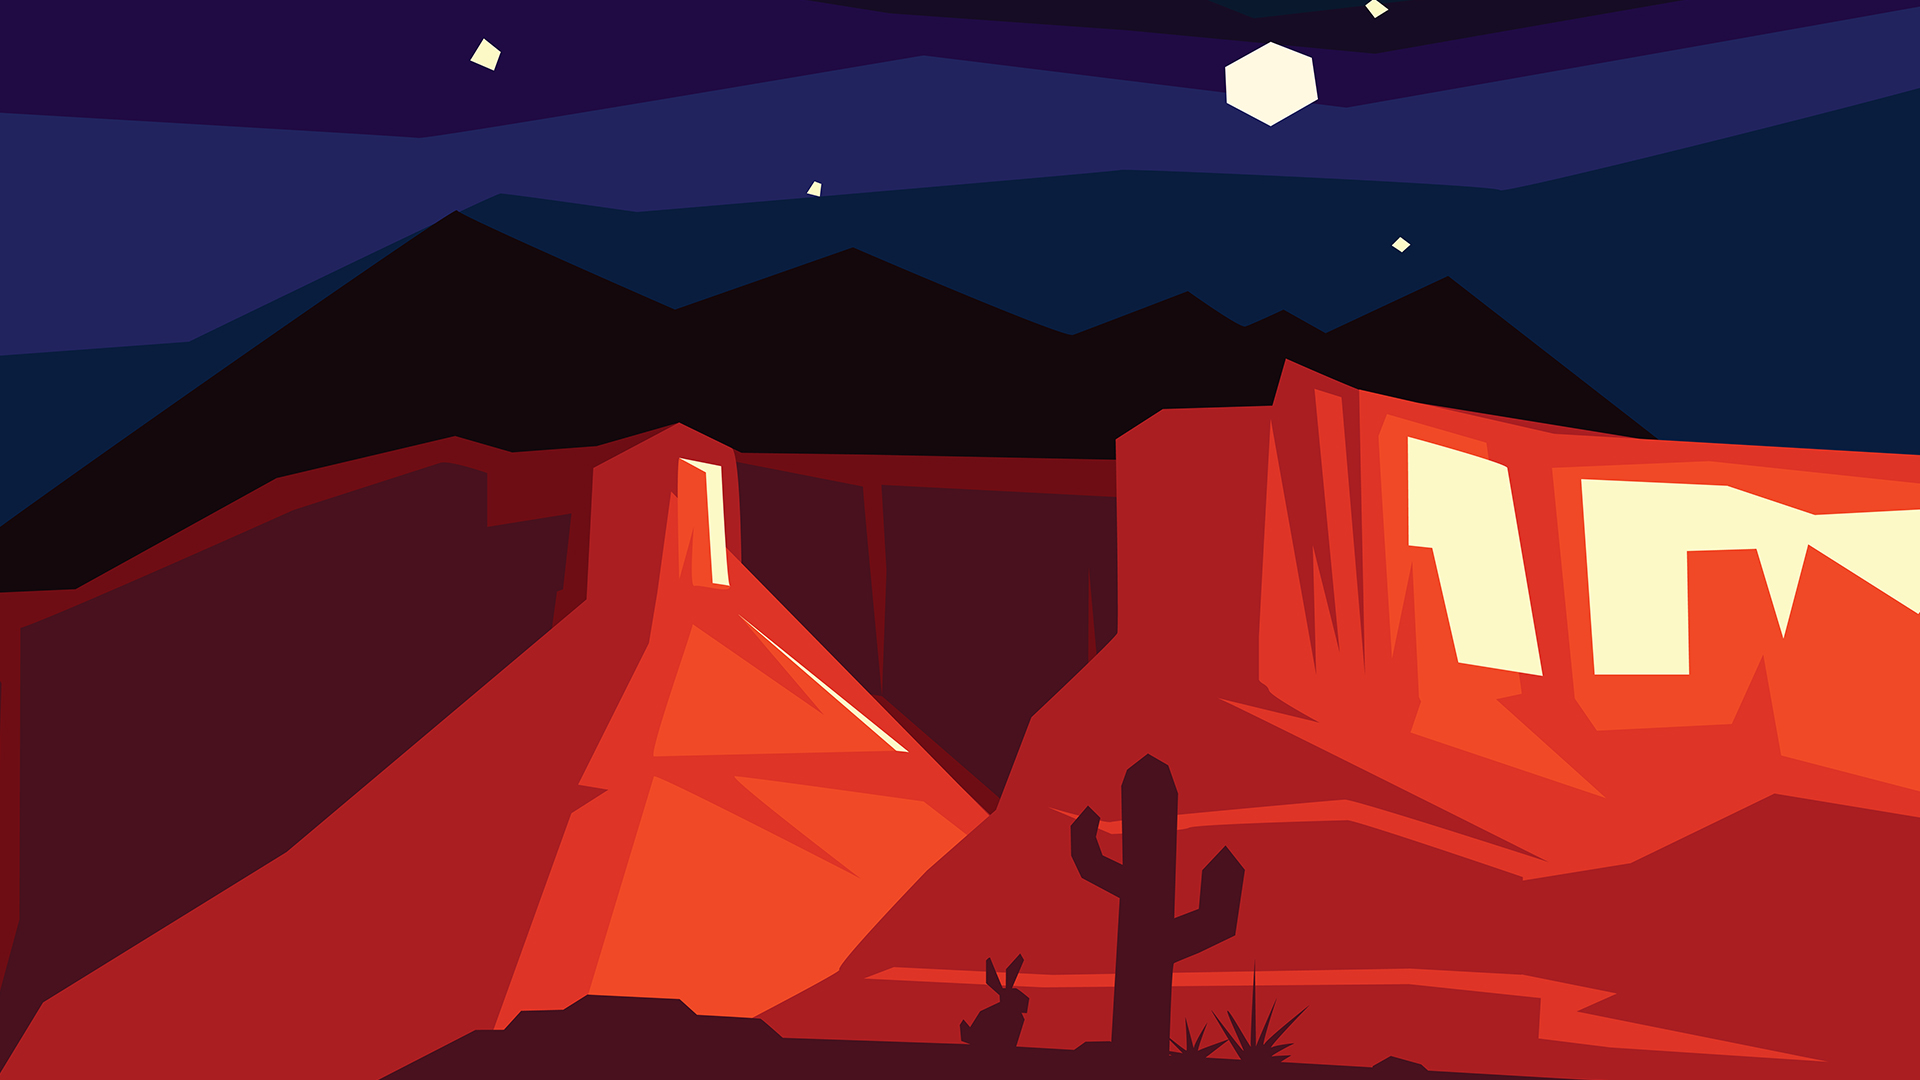 angular vector artwork of mesas, orange lit at night